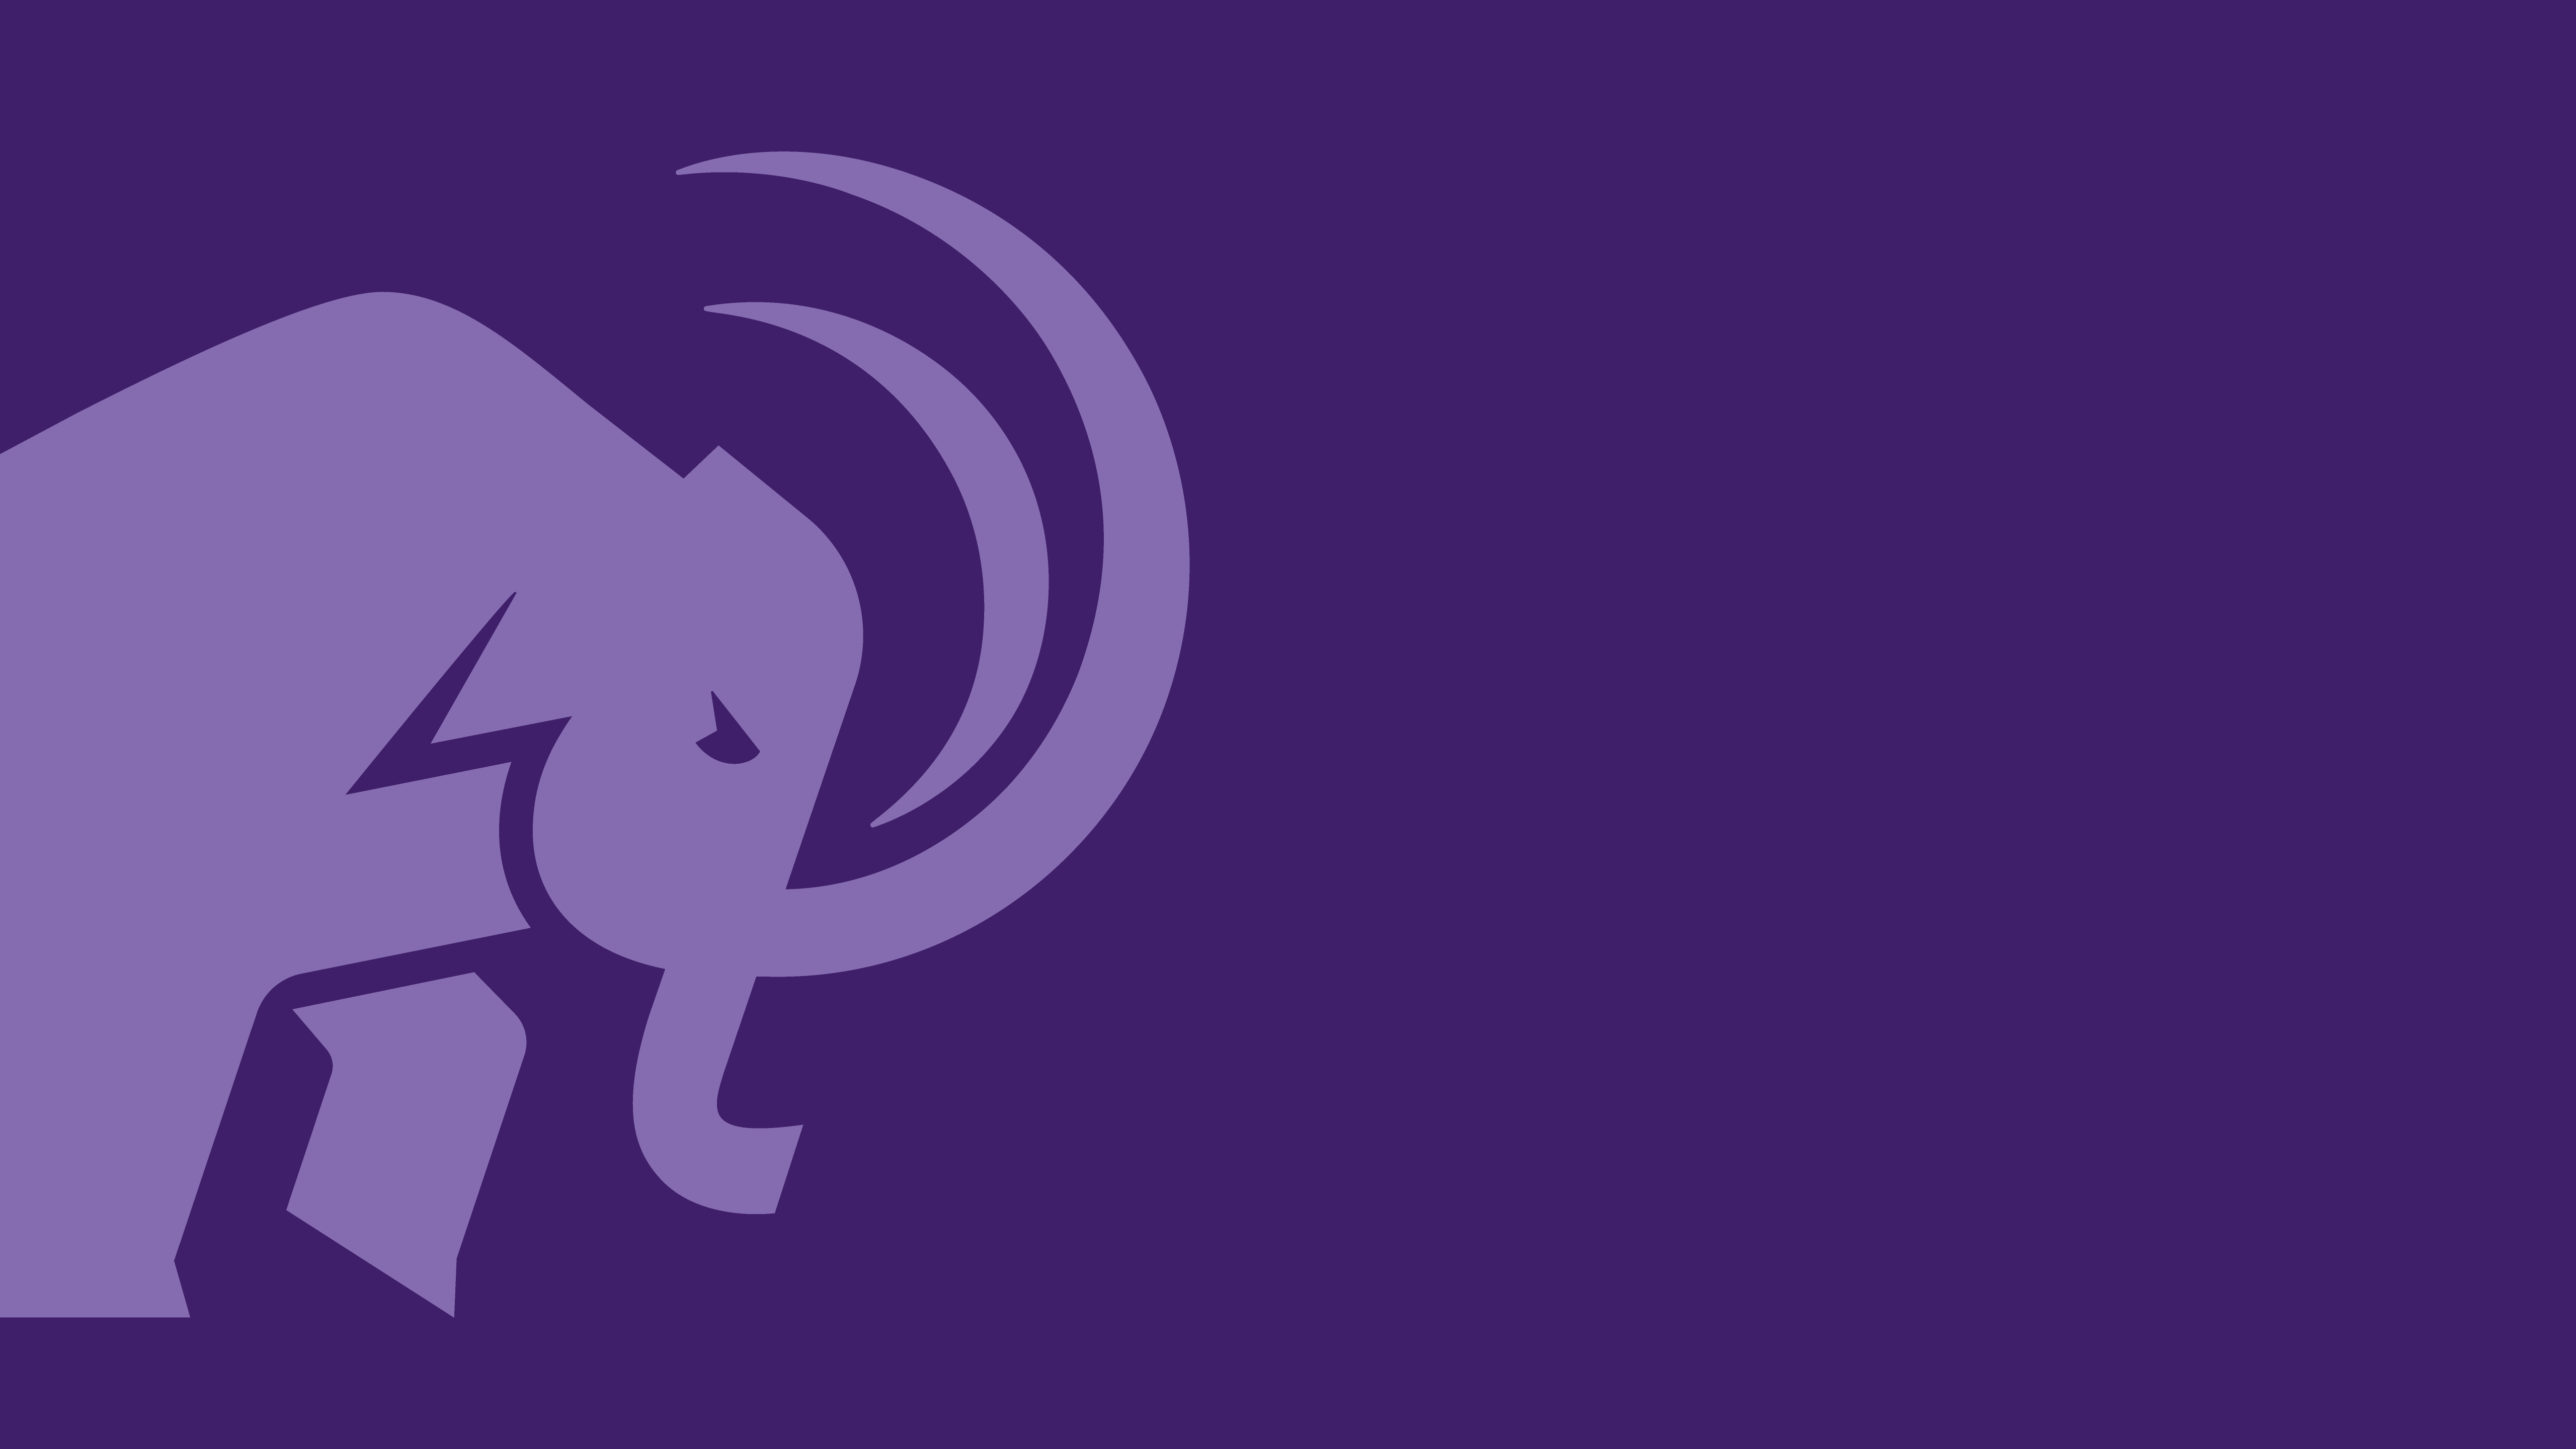 Light purple mammoth cropped logo on dark purple background